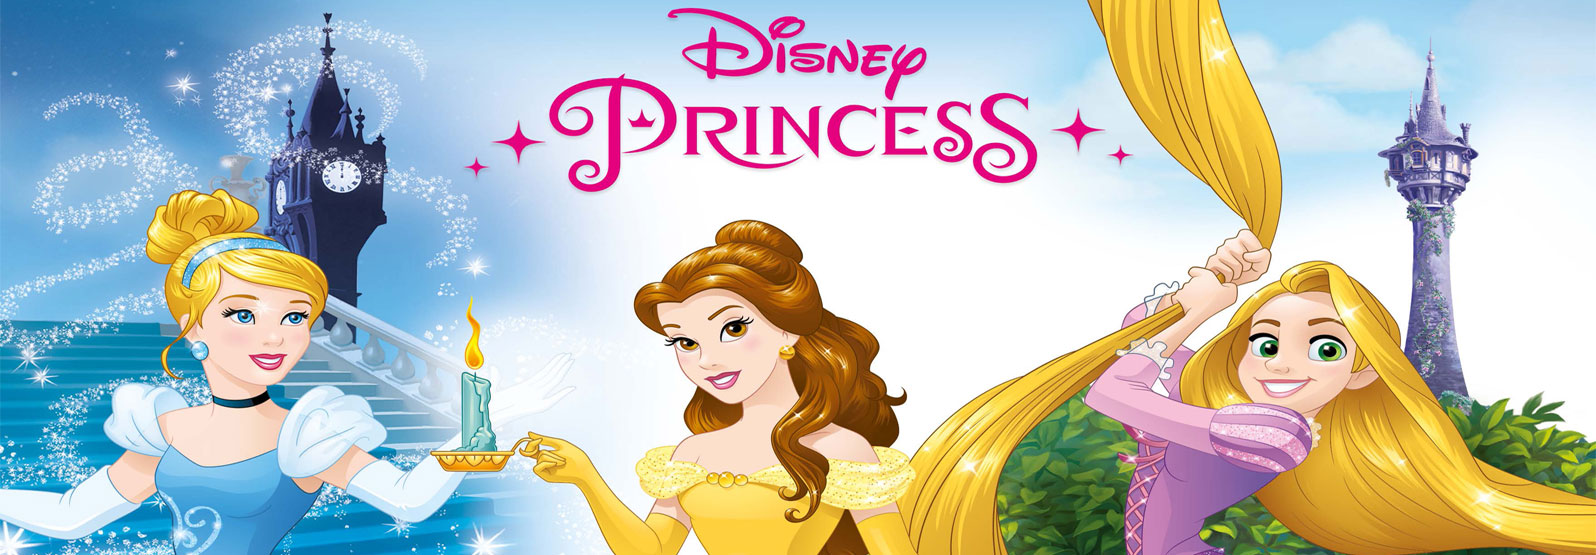 Disney Princess 3